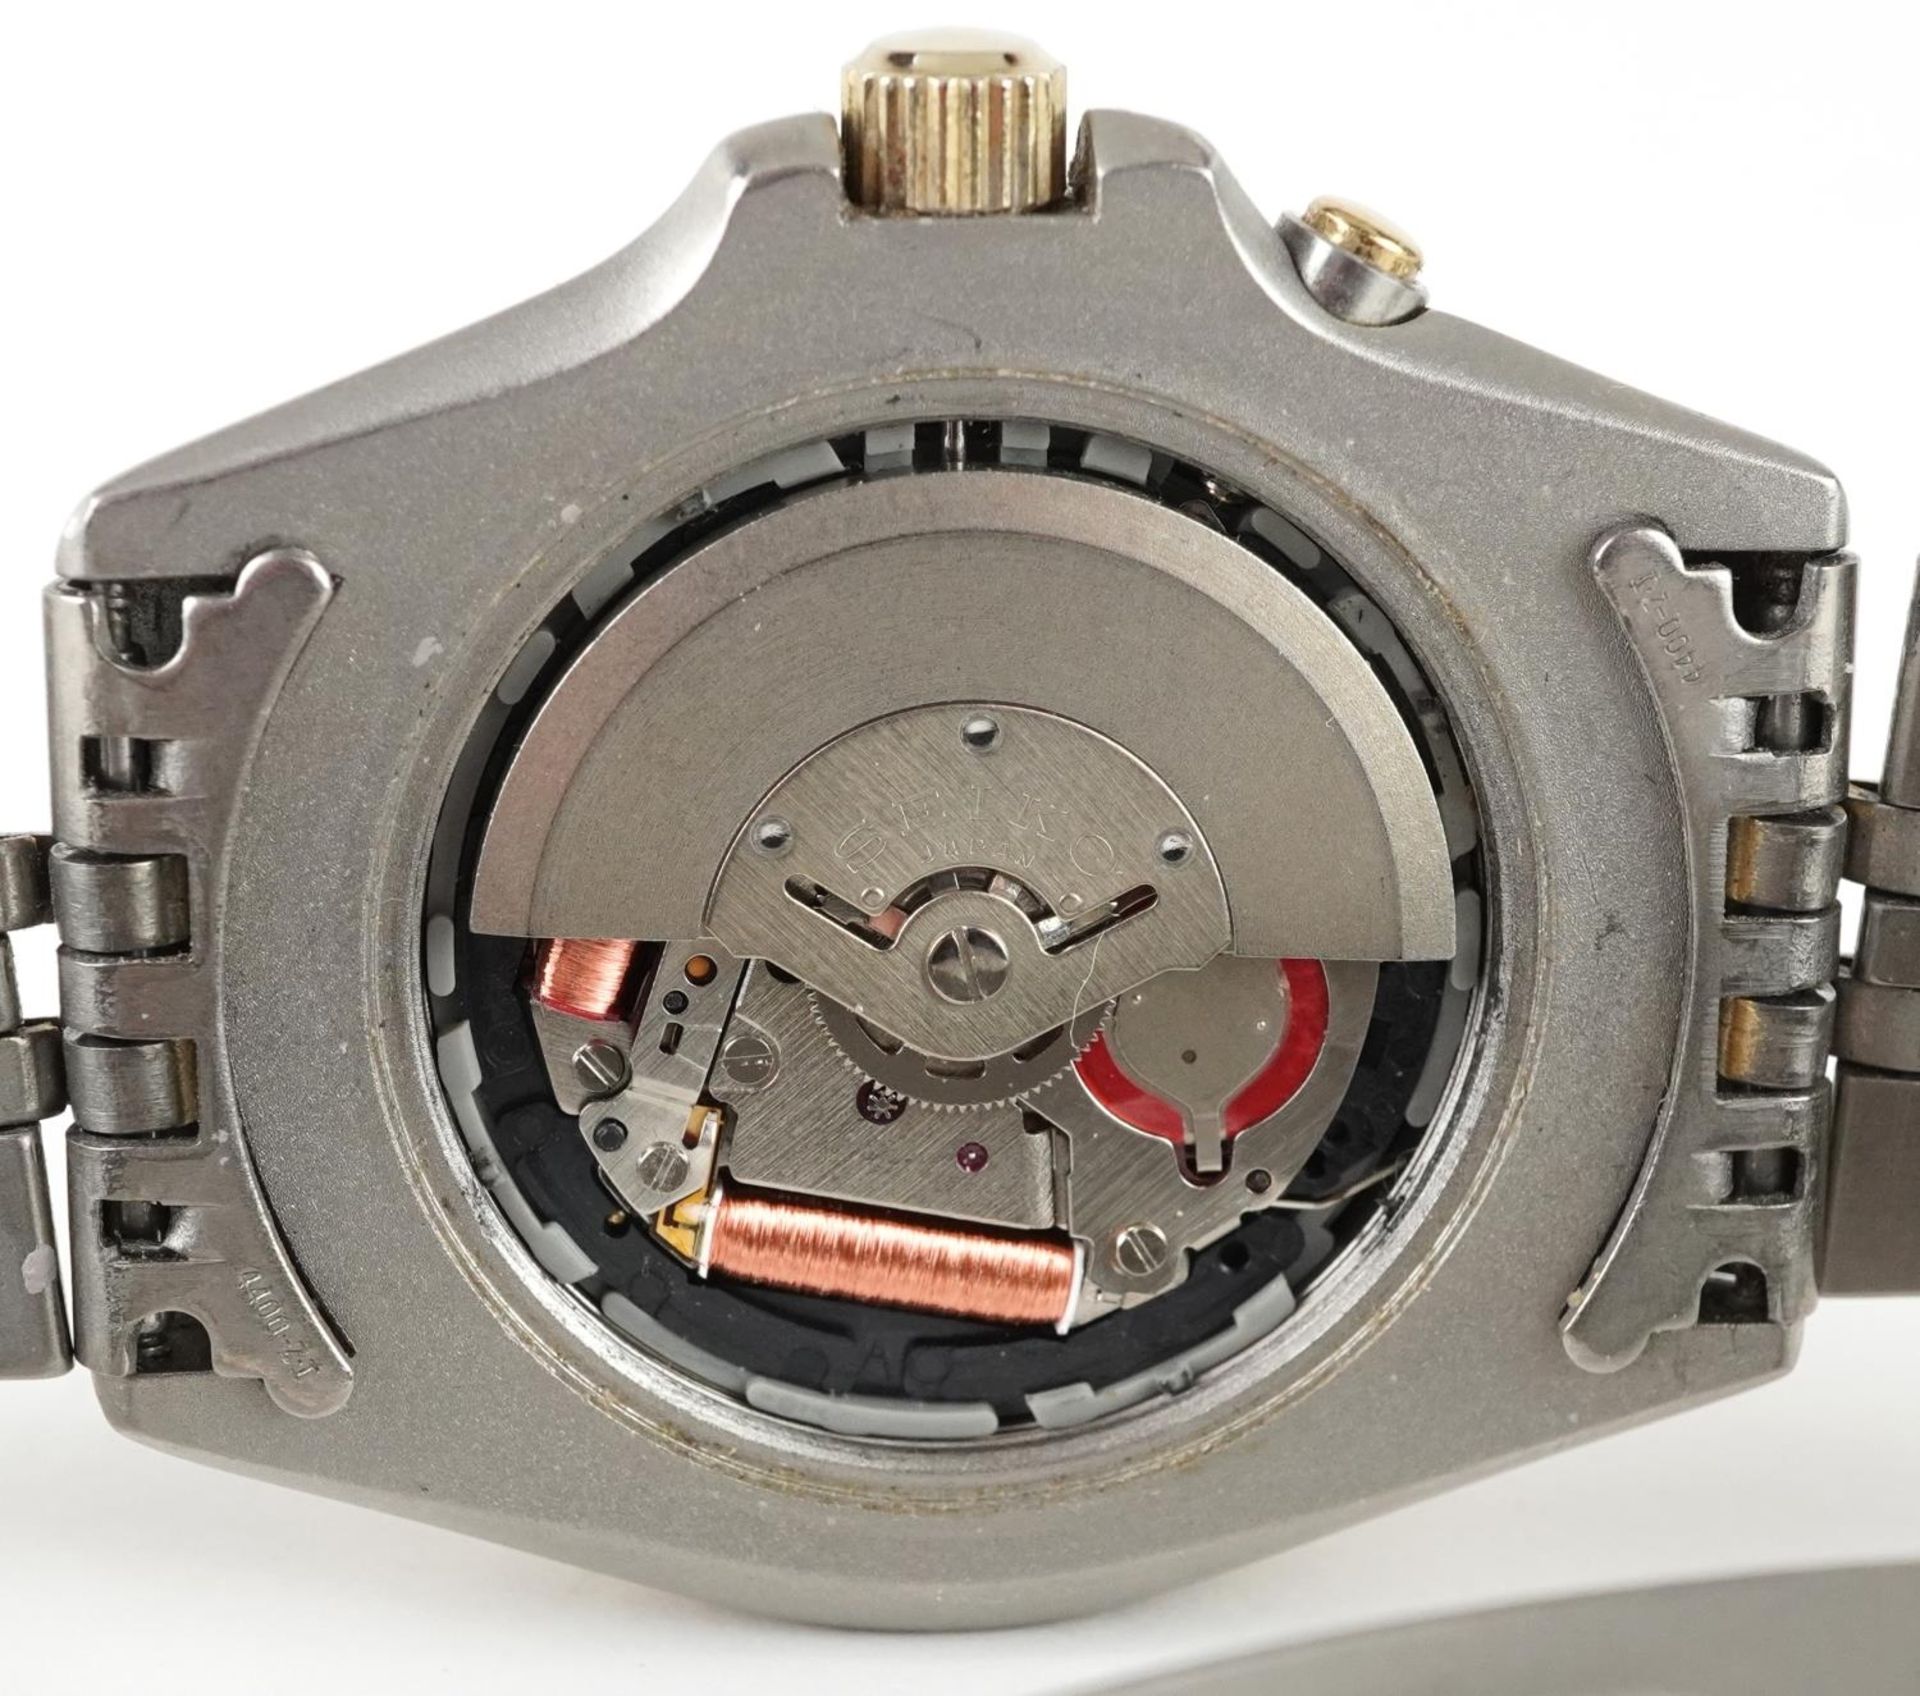 Seiko, gentlemen's Seiko Titanium Sports 200 kinetic wristwatch having day/date aperture and - Image 6 of 8